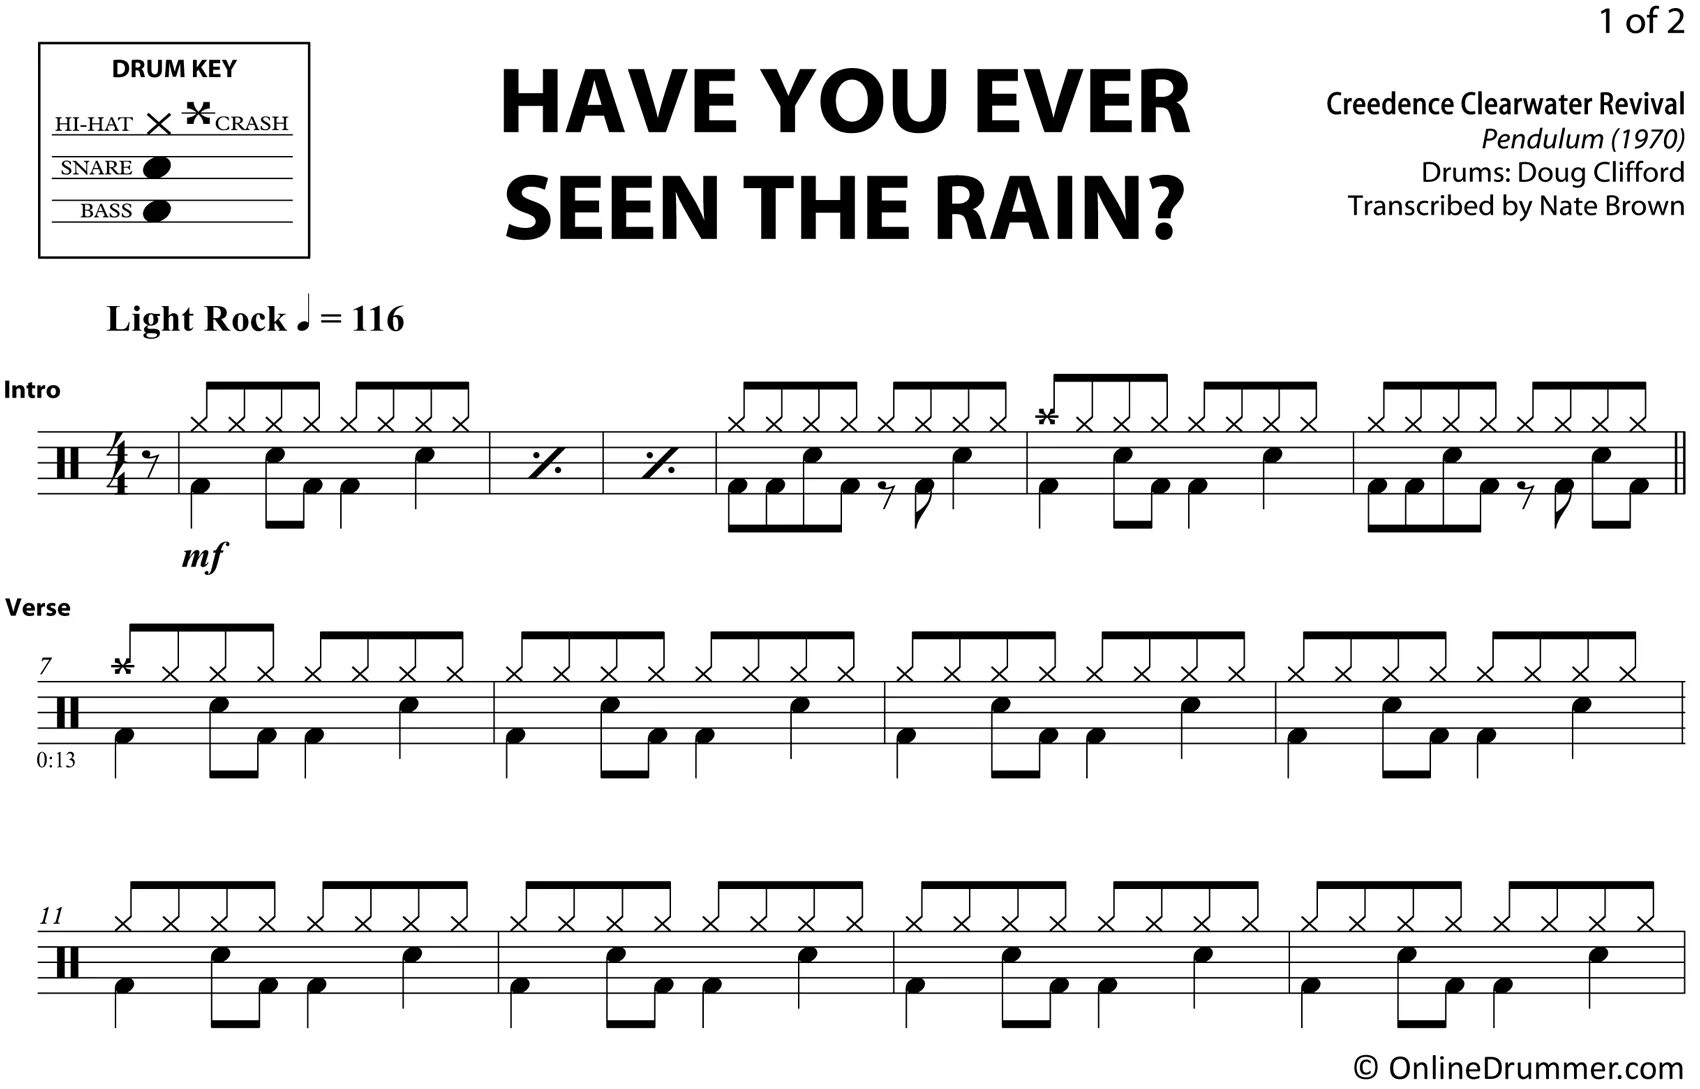 Creedence rain. Have you ever seen the Rain? От Creedence Clearwater Revival. Creedence Clearwater Revival - have you ever seen the Rain (1970). Have you ever seen the Rain Криденс. Have you ever seen the Rain Ноты.